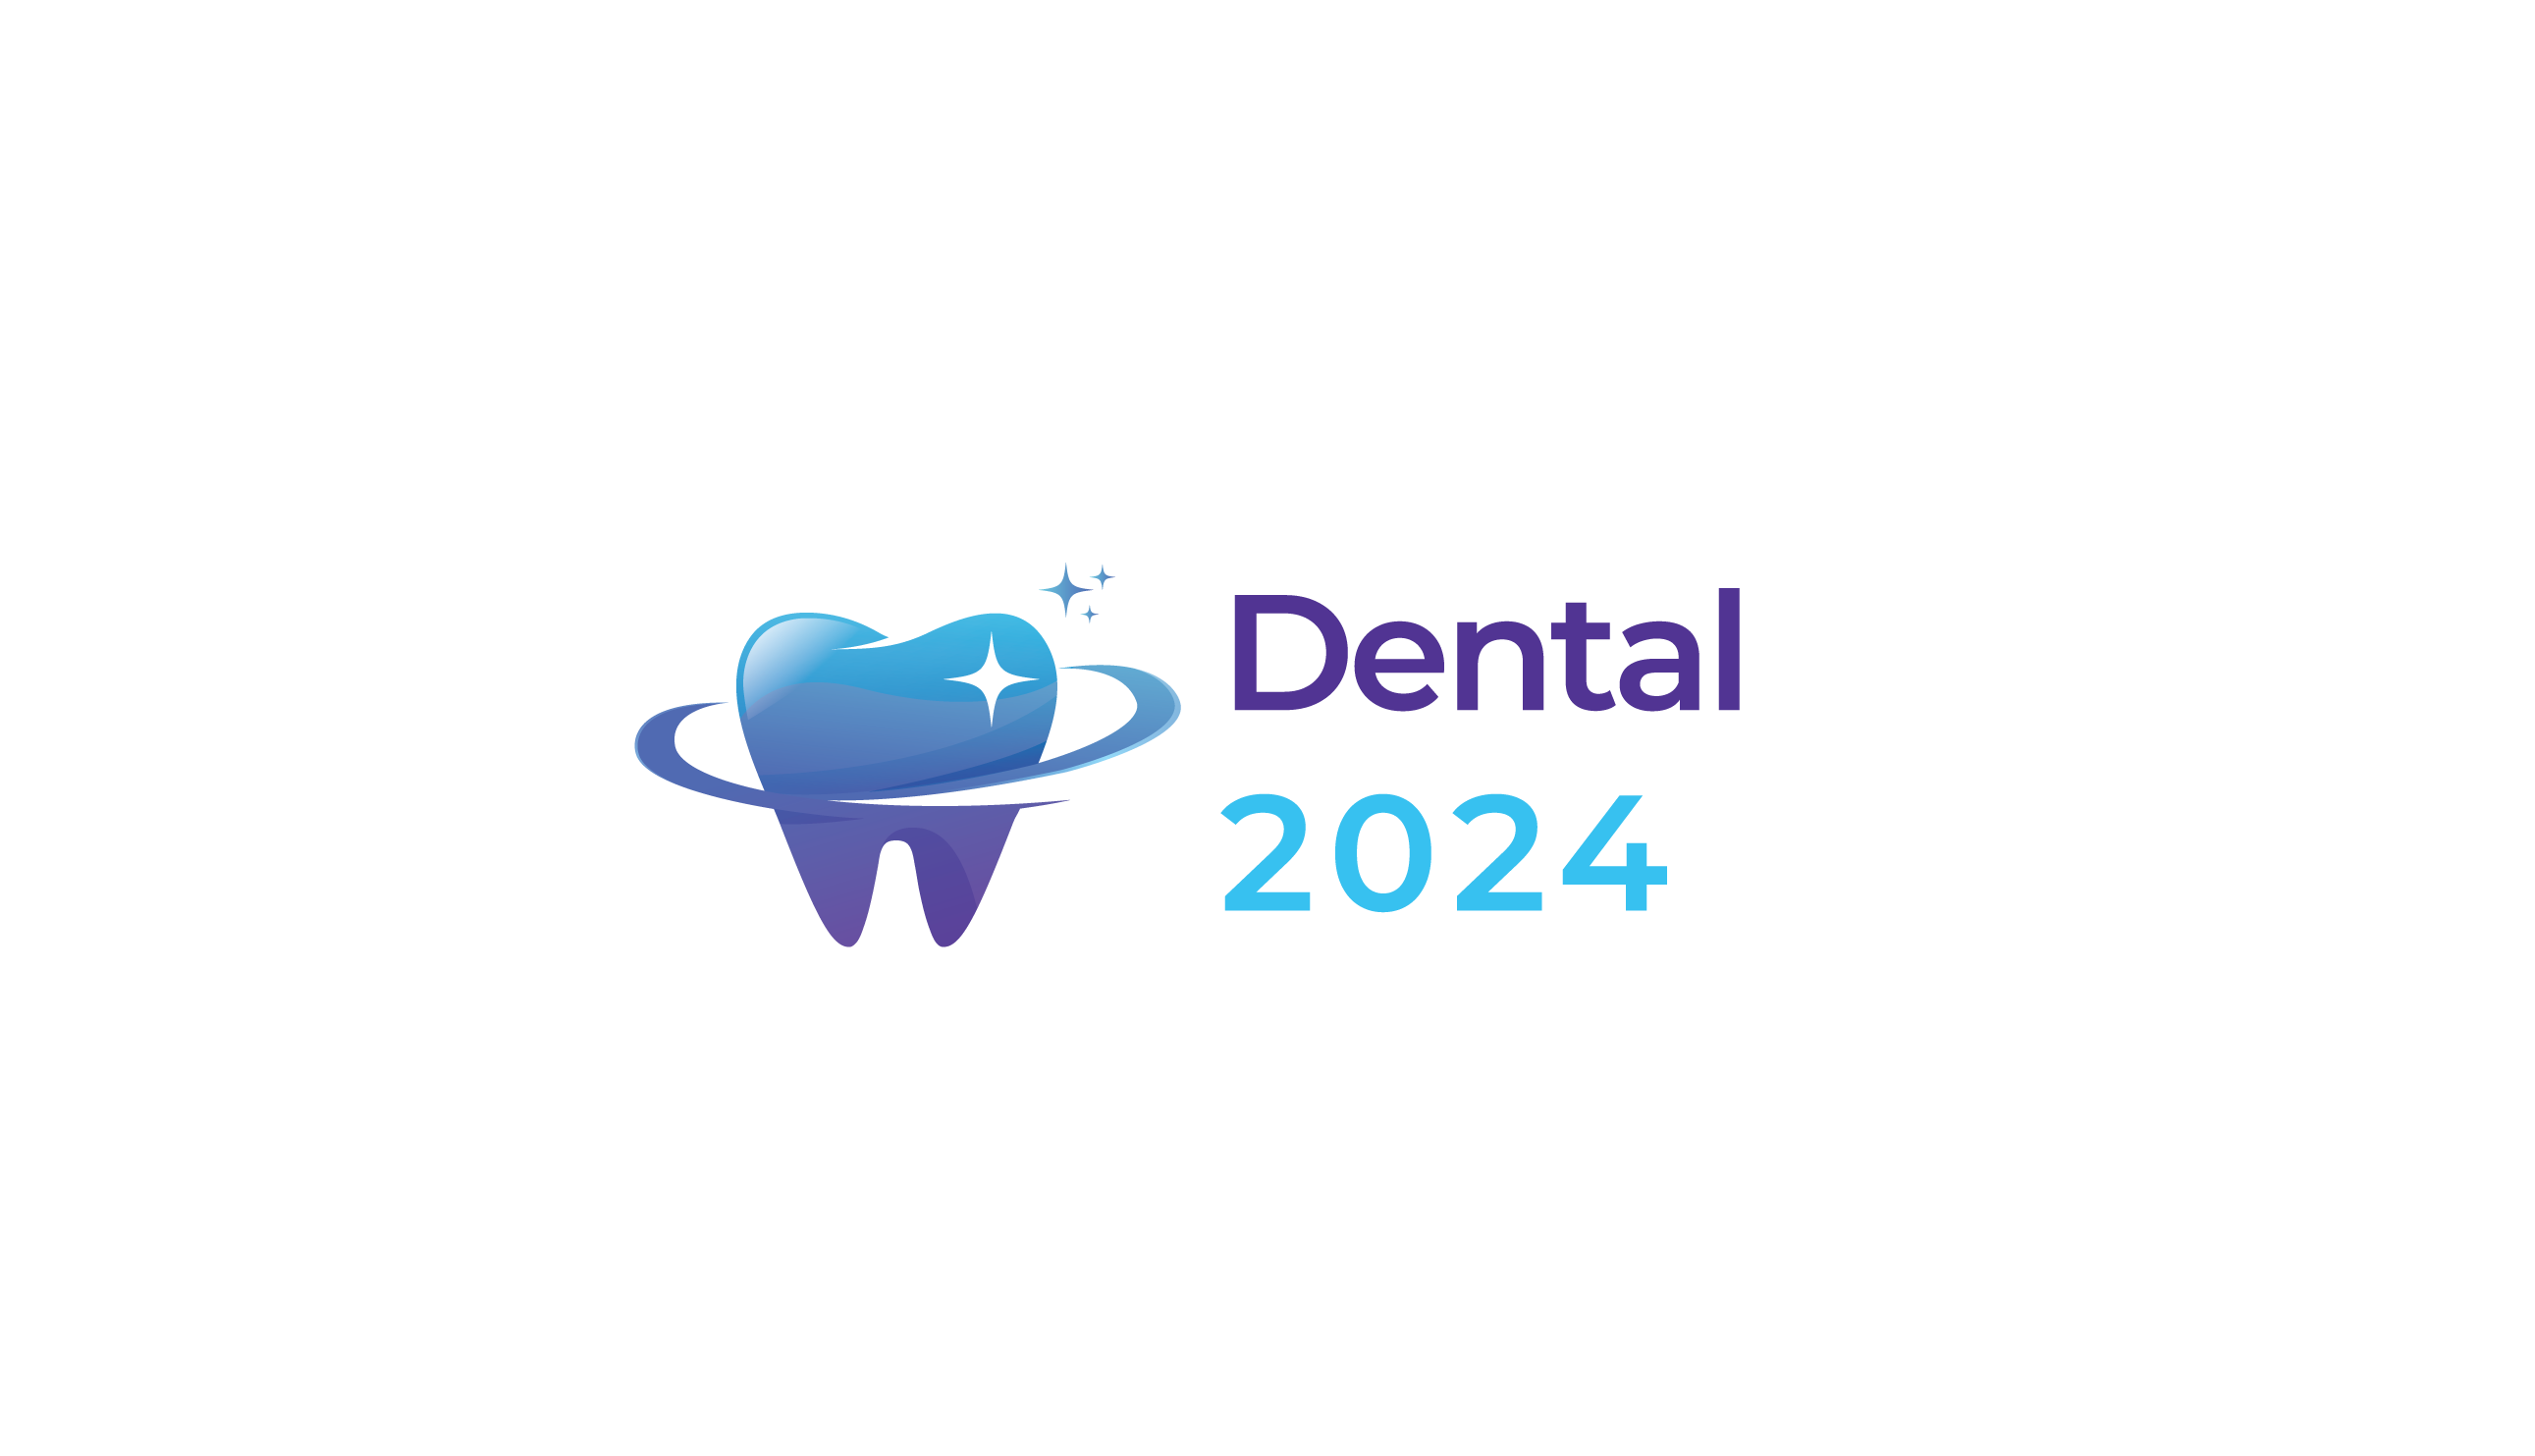 International Conference on Orthodontics and Dental Medicine